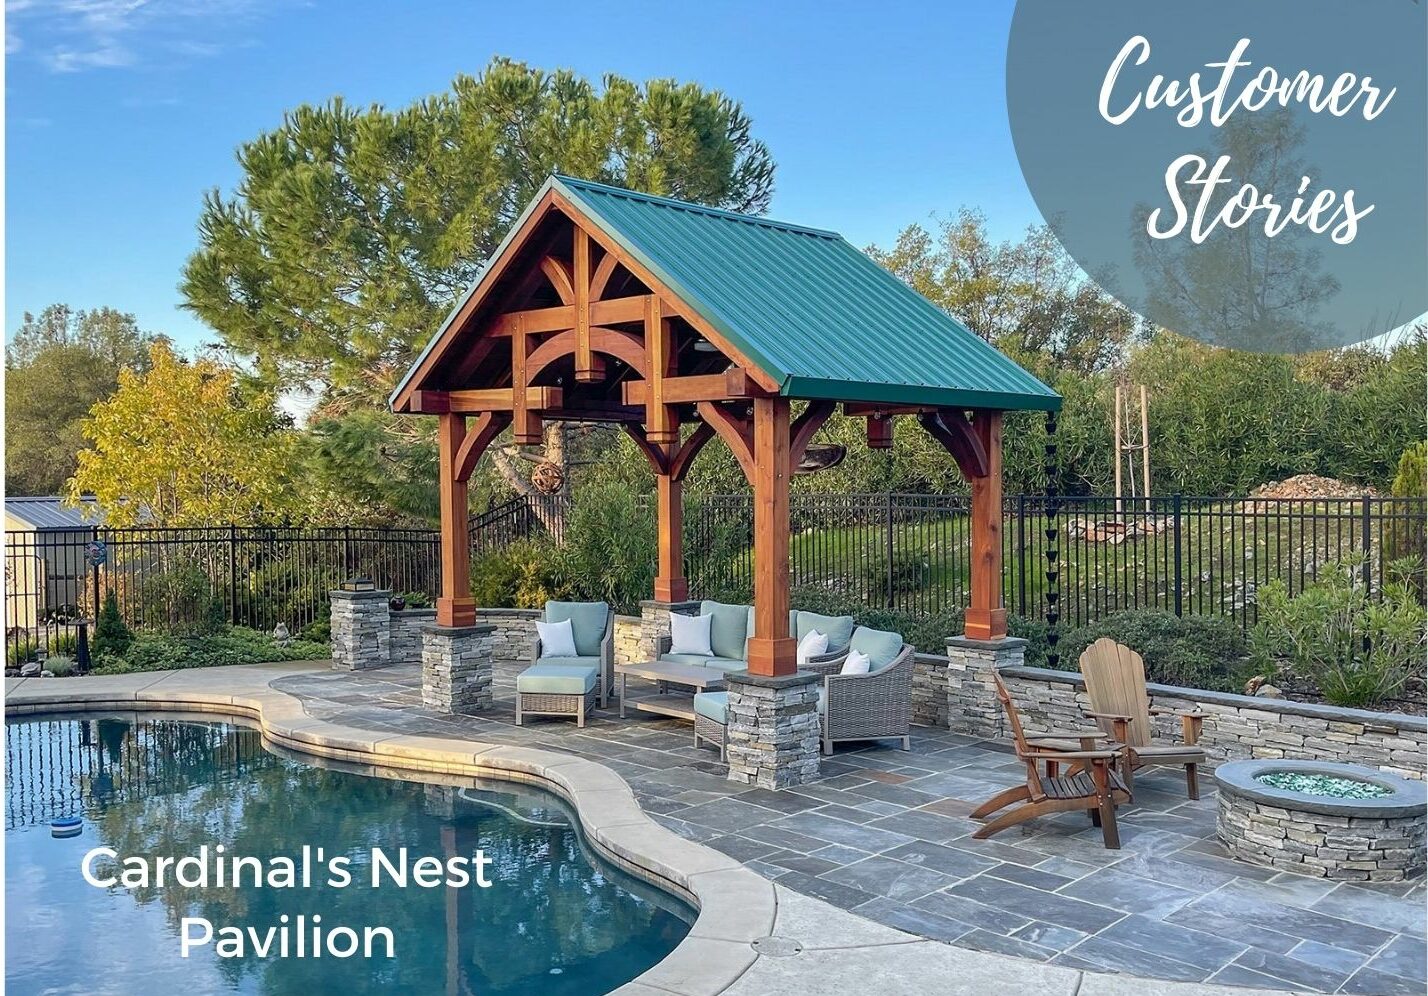 Photo of Cardinal's nest Pavilion with stonework poolside. Caption: Customer Stories, Cardinal's Nest Pavilion